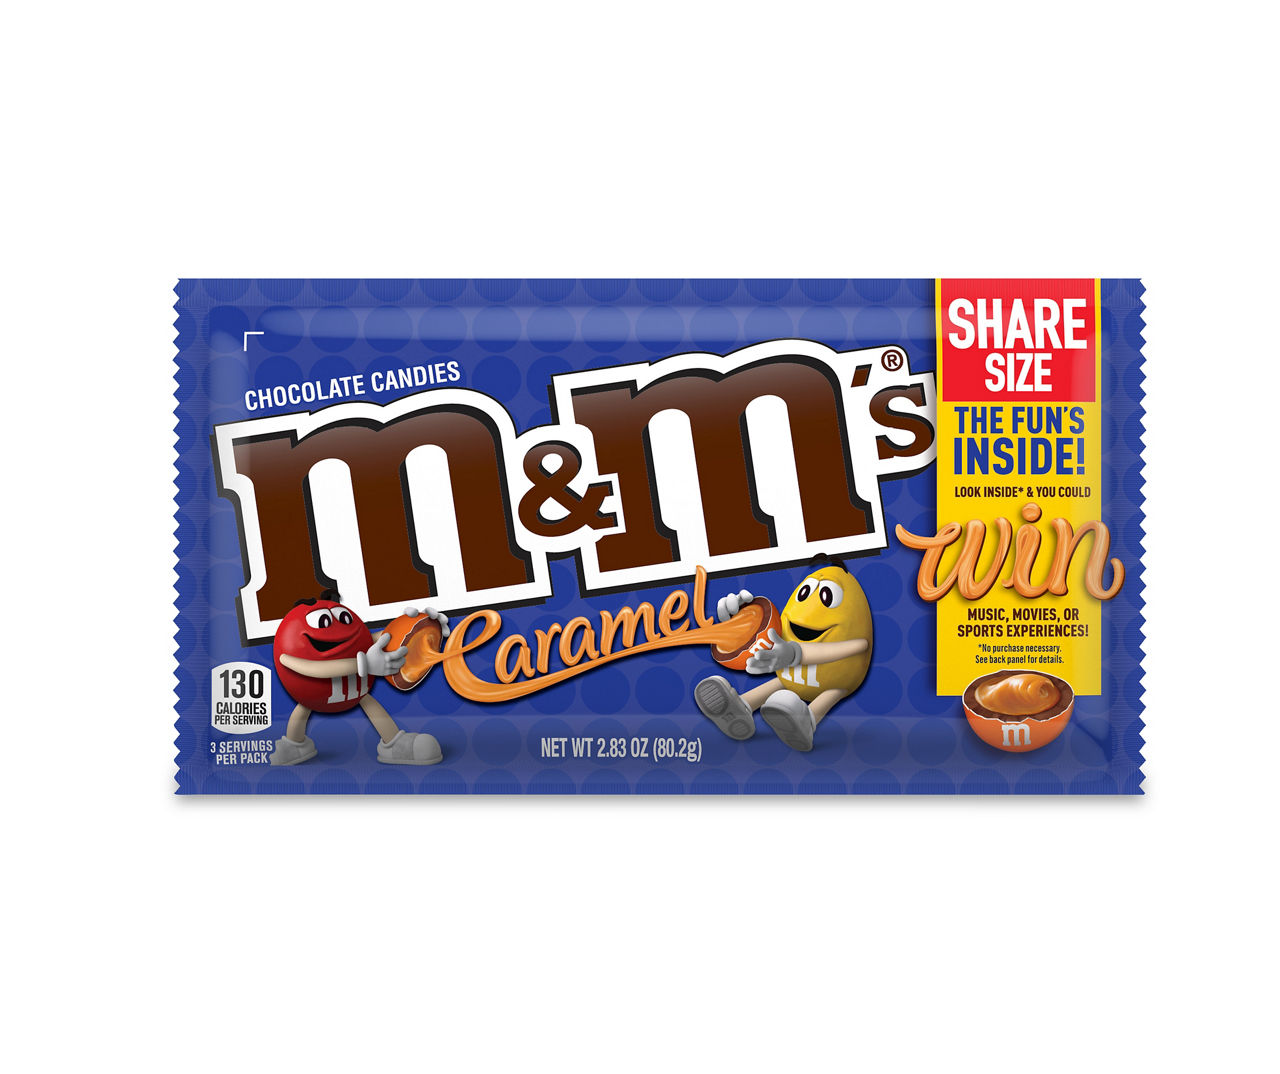 M&M Caramel, Caramel Candy, Candy Bars